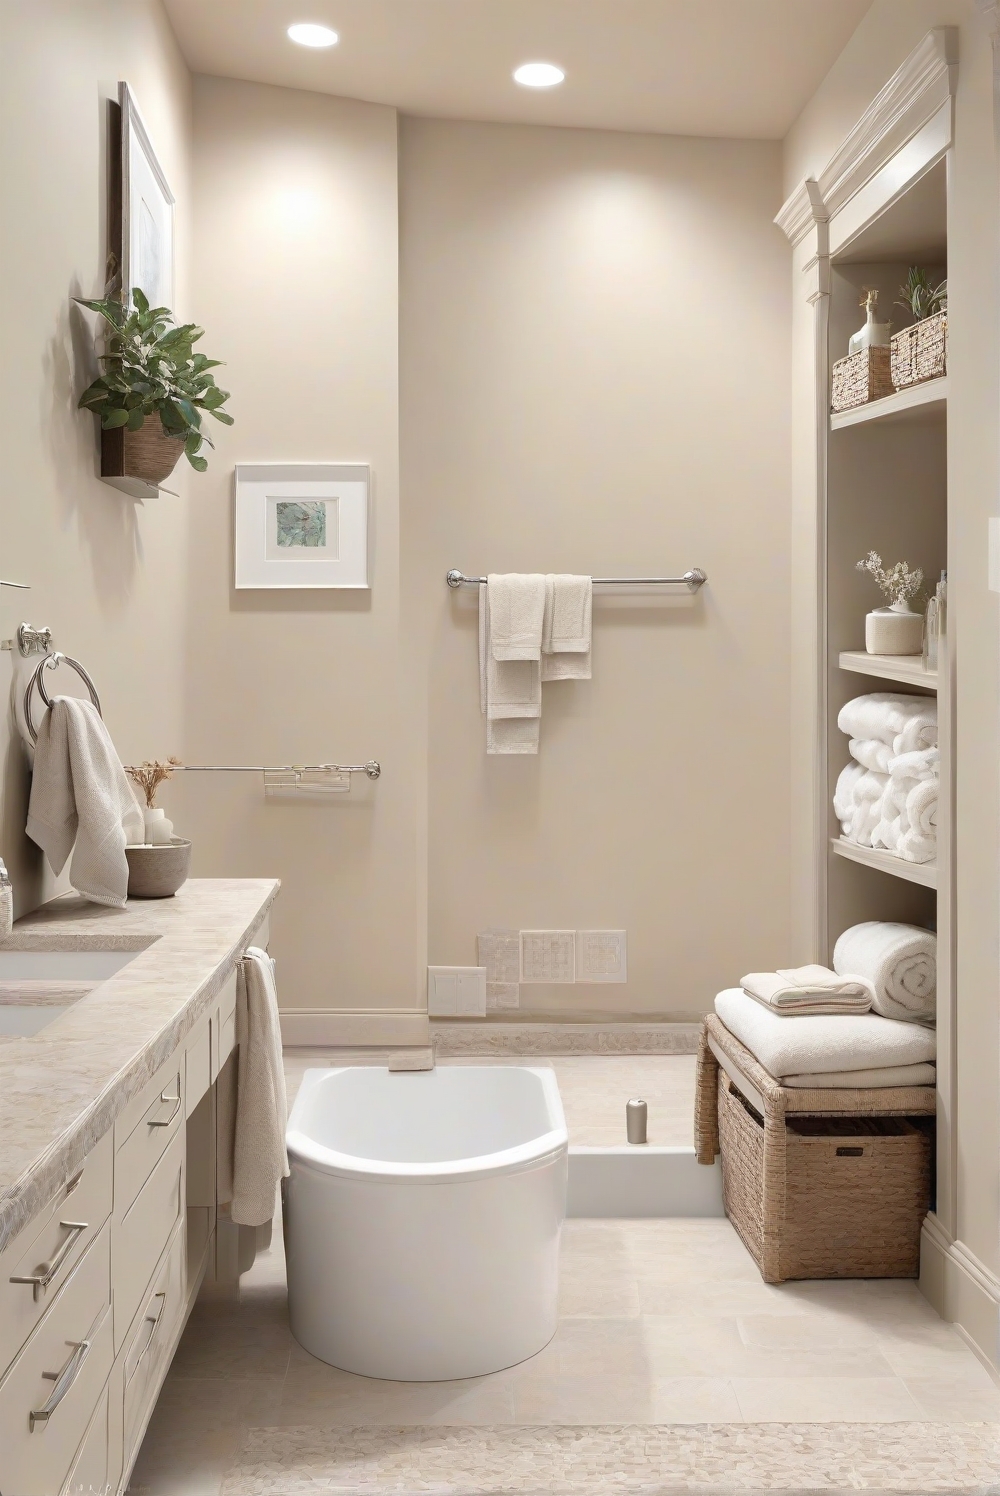 Accessible Beige, bathroom decor, elegant bathroom, beige paint color, bathroom design ideas, neutral bathroom, earthy tones